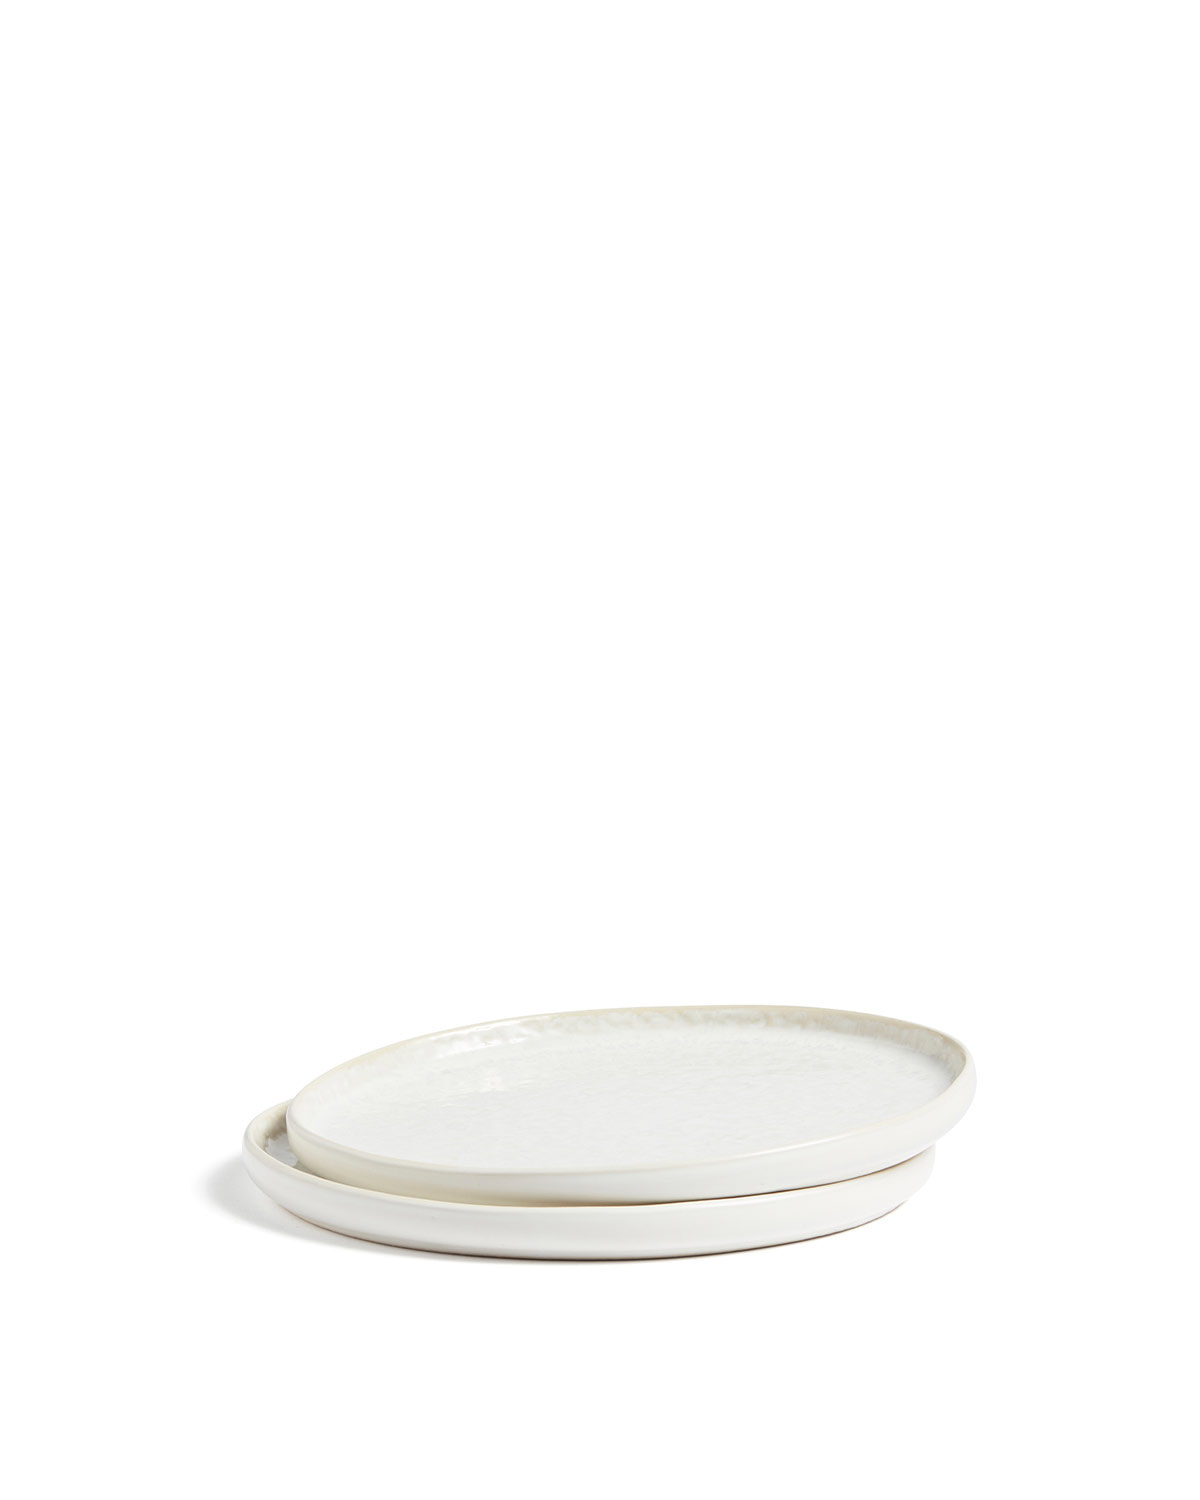 Logotrade Albe 2-Piece Plate Set - White White